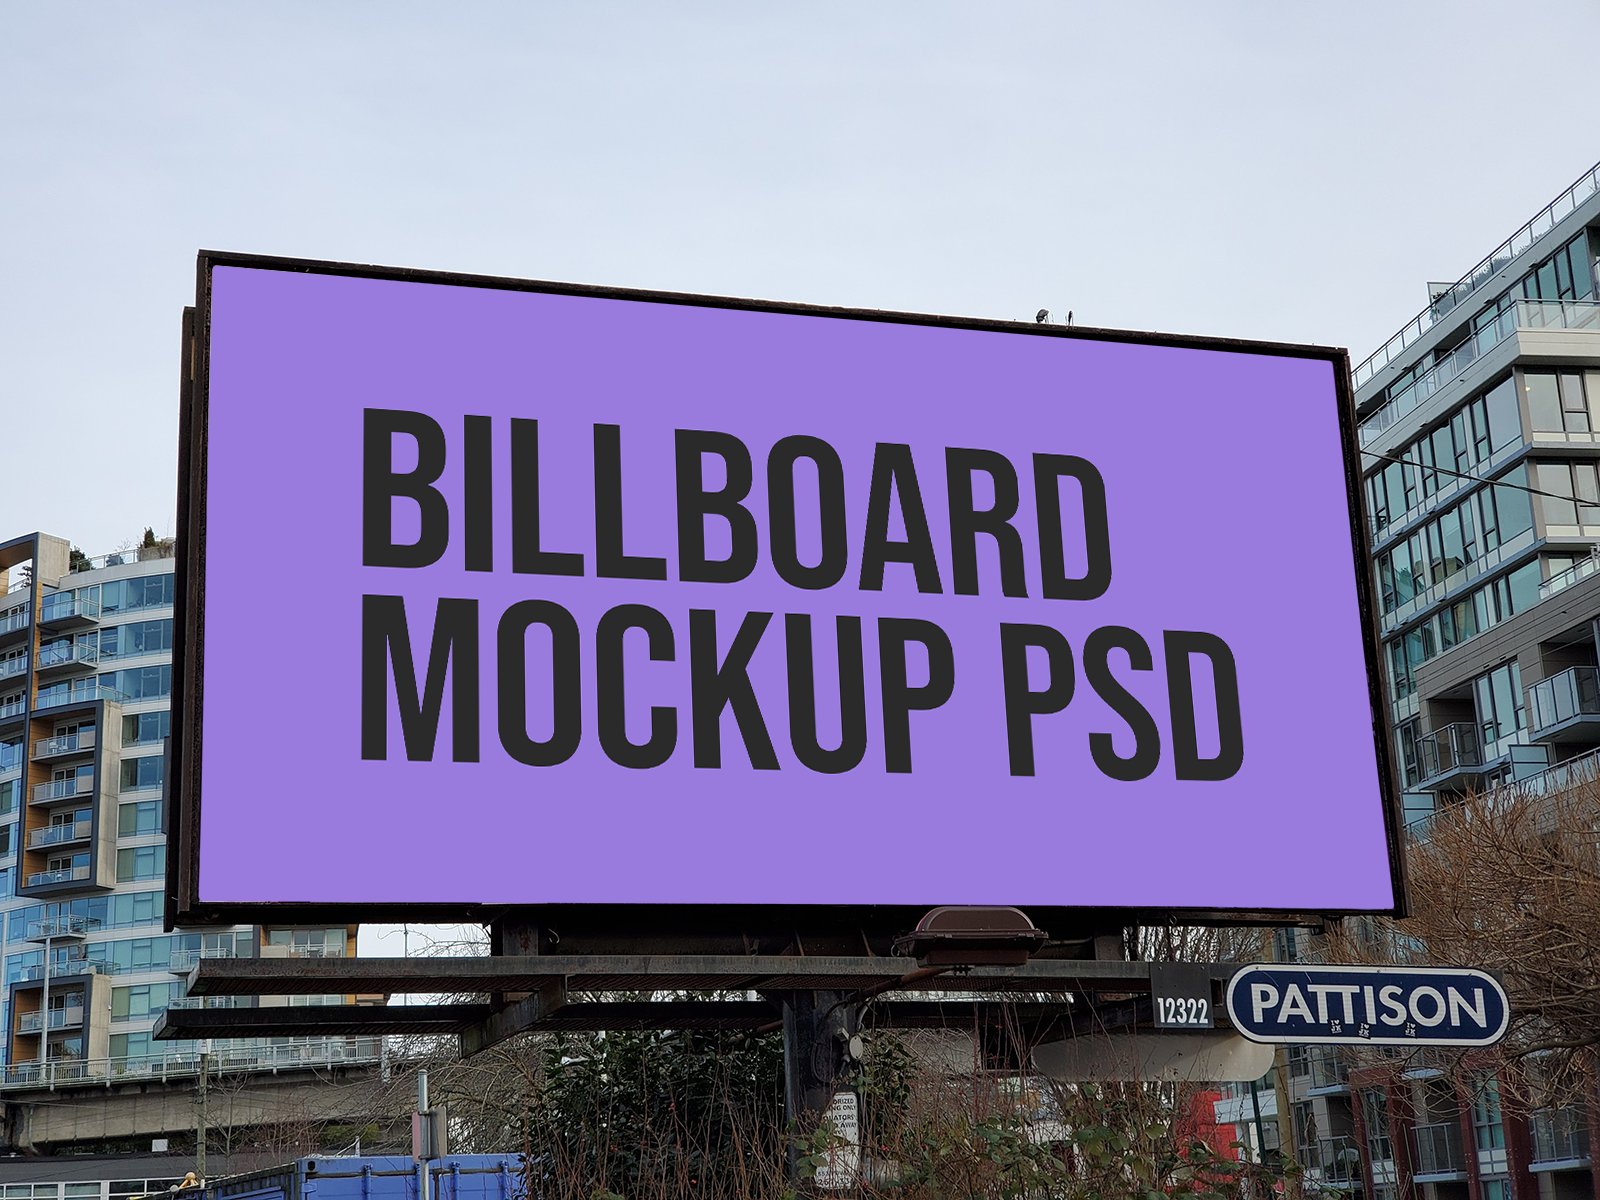 Billboard mockup cover image.